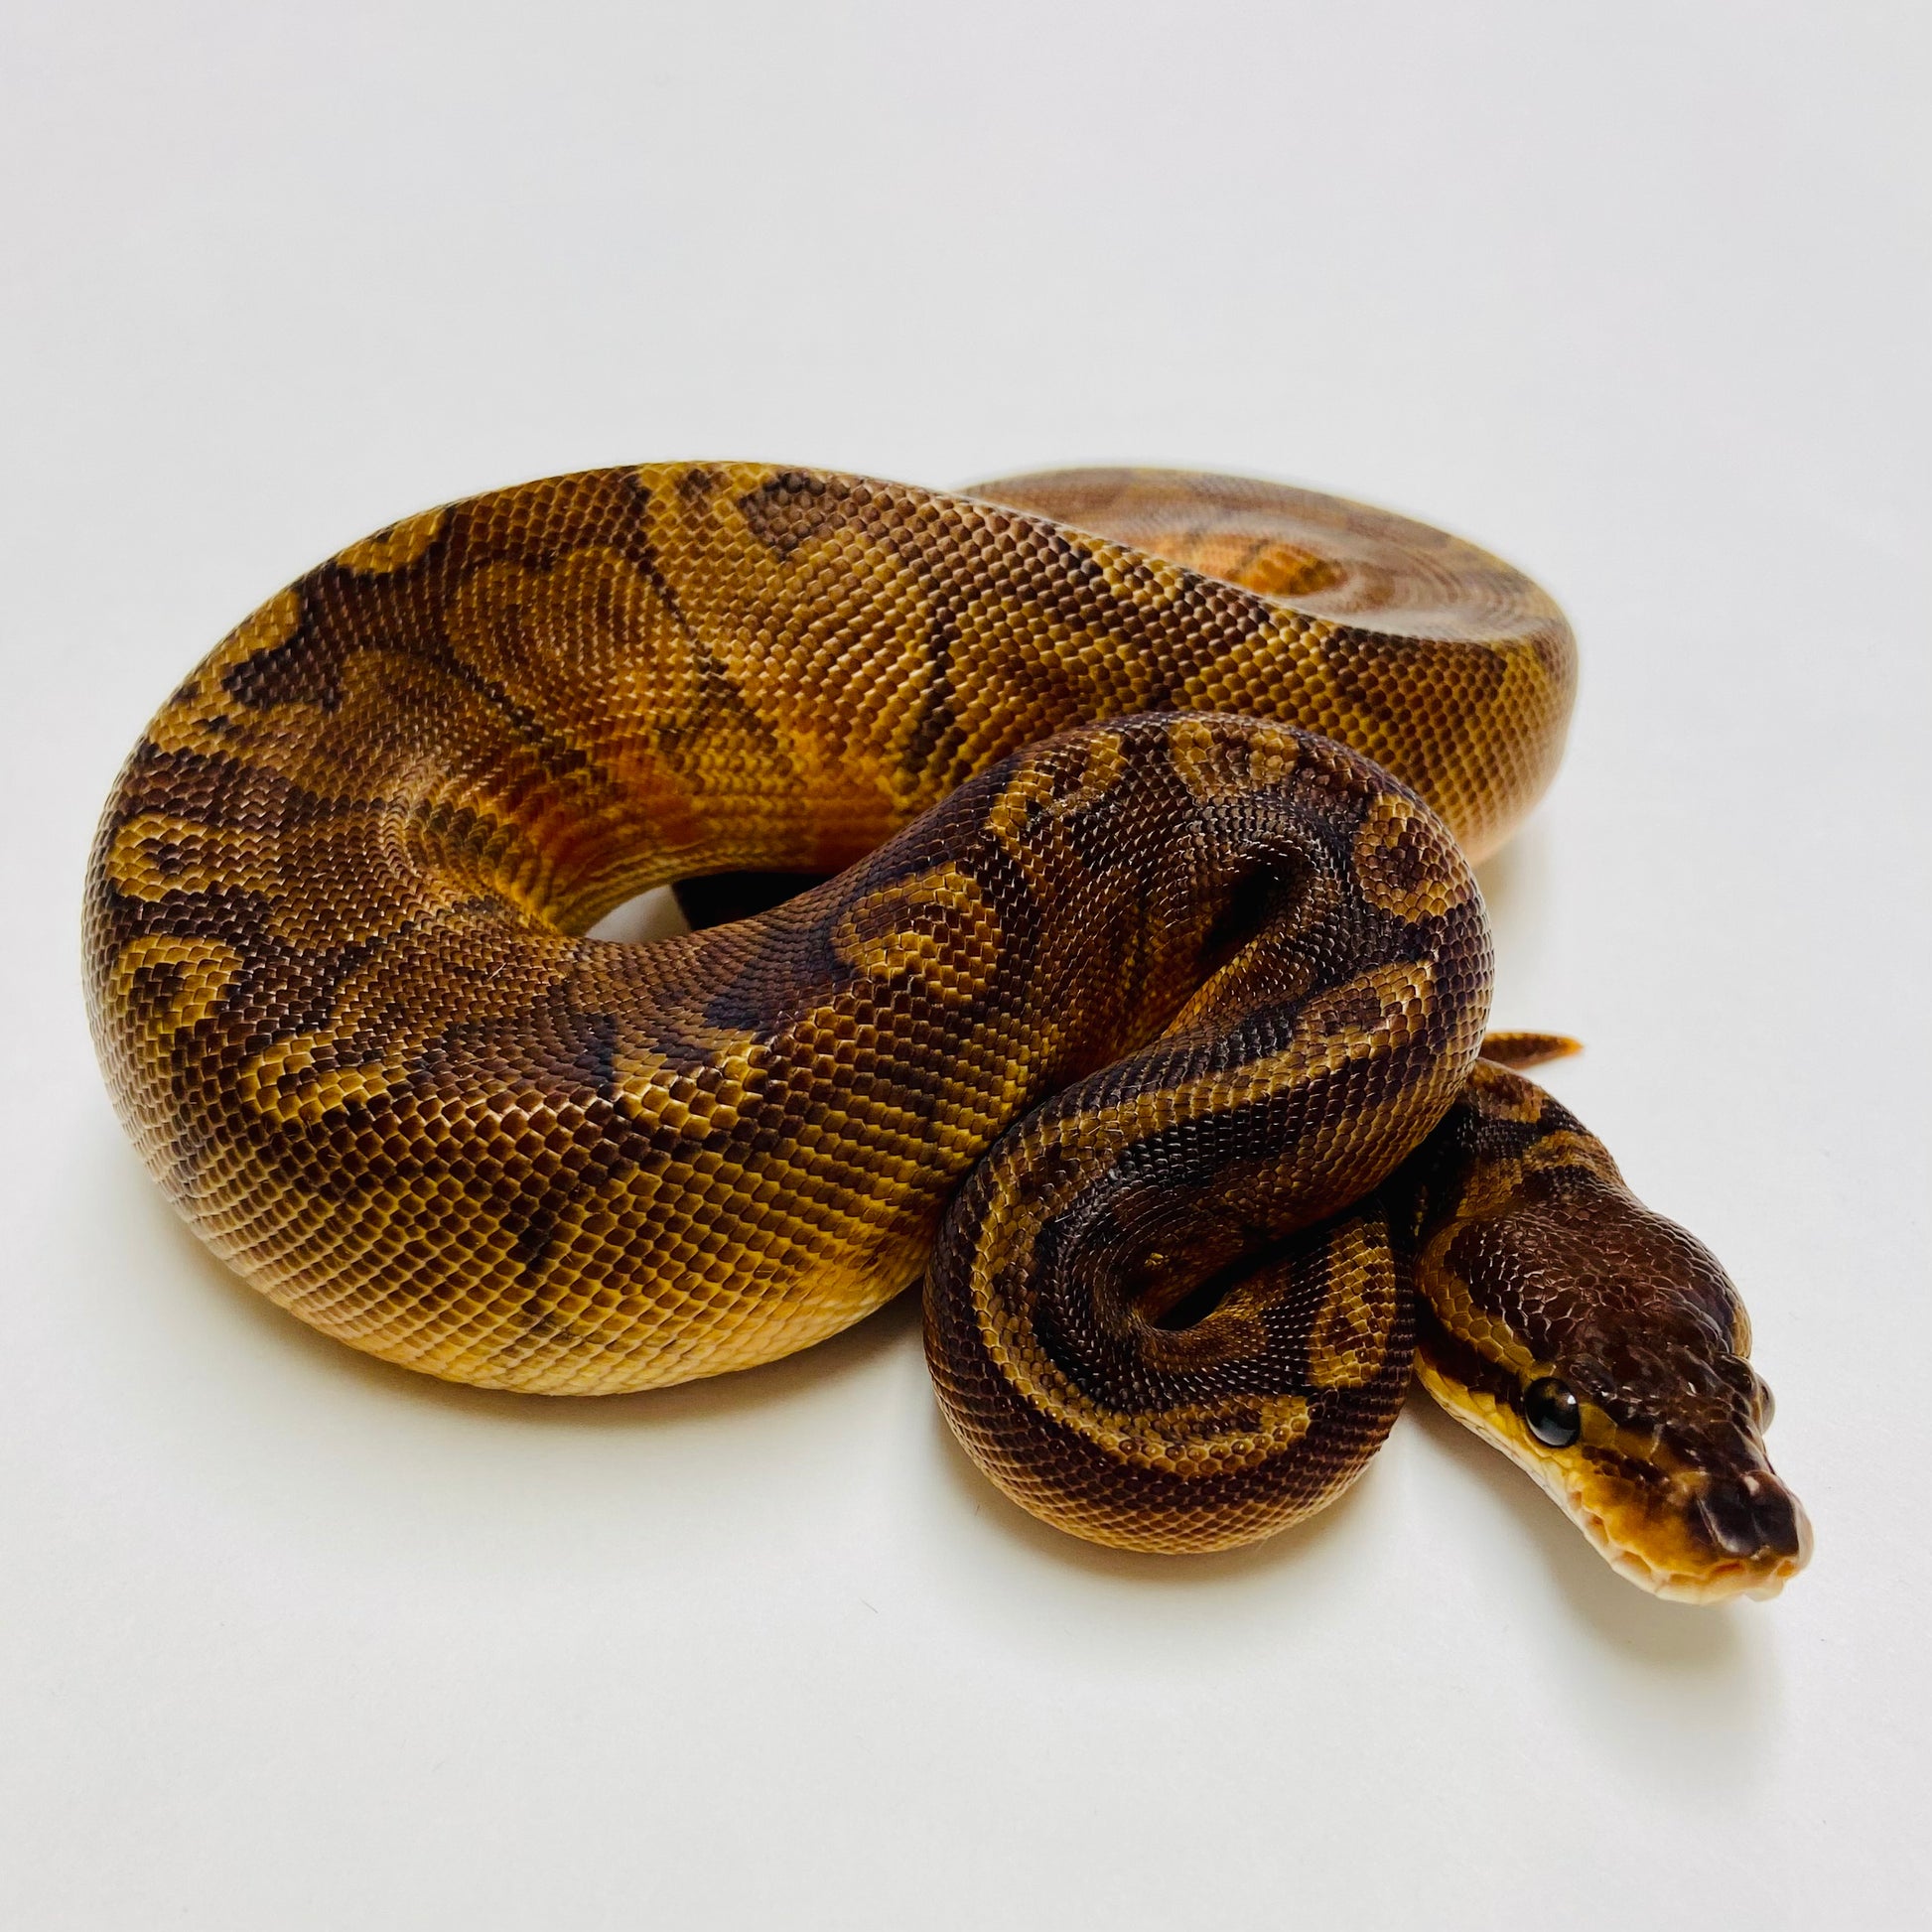 Sunset Ball Python - Female #2023F02